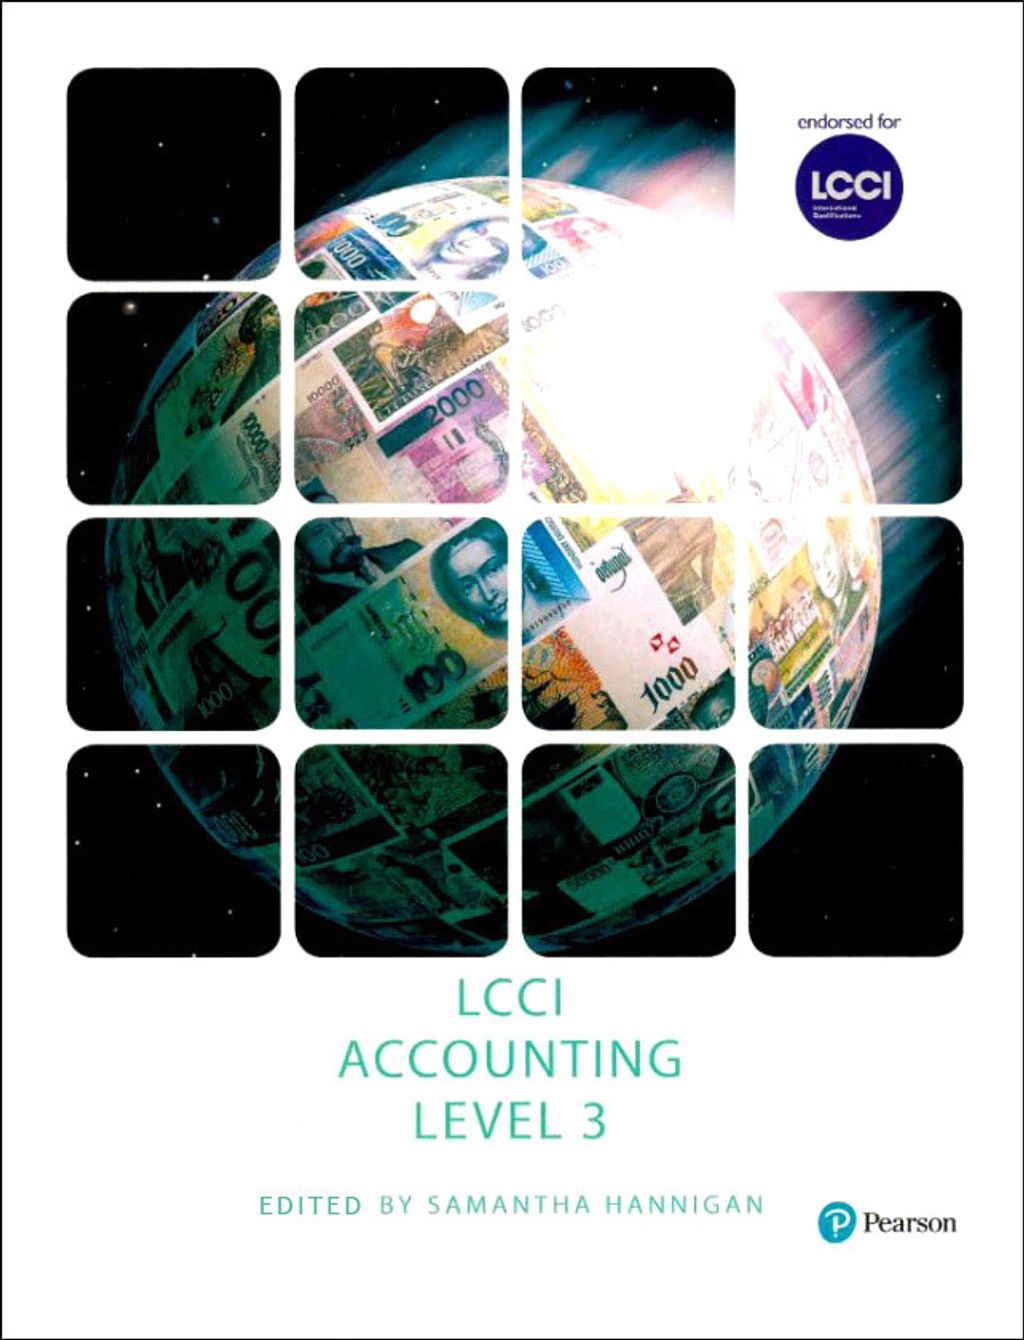 LCCI accounting level 3.jpg